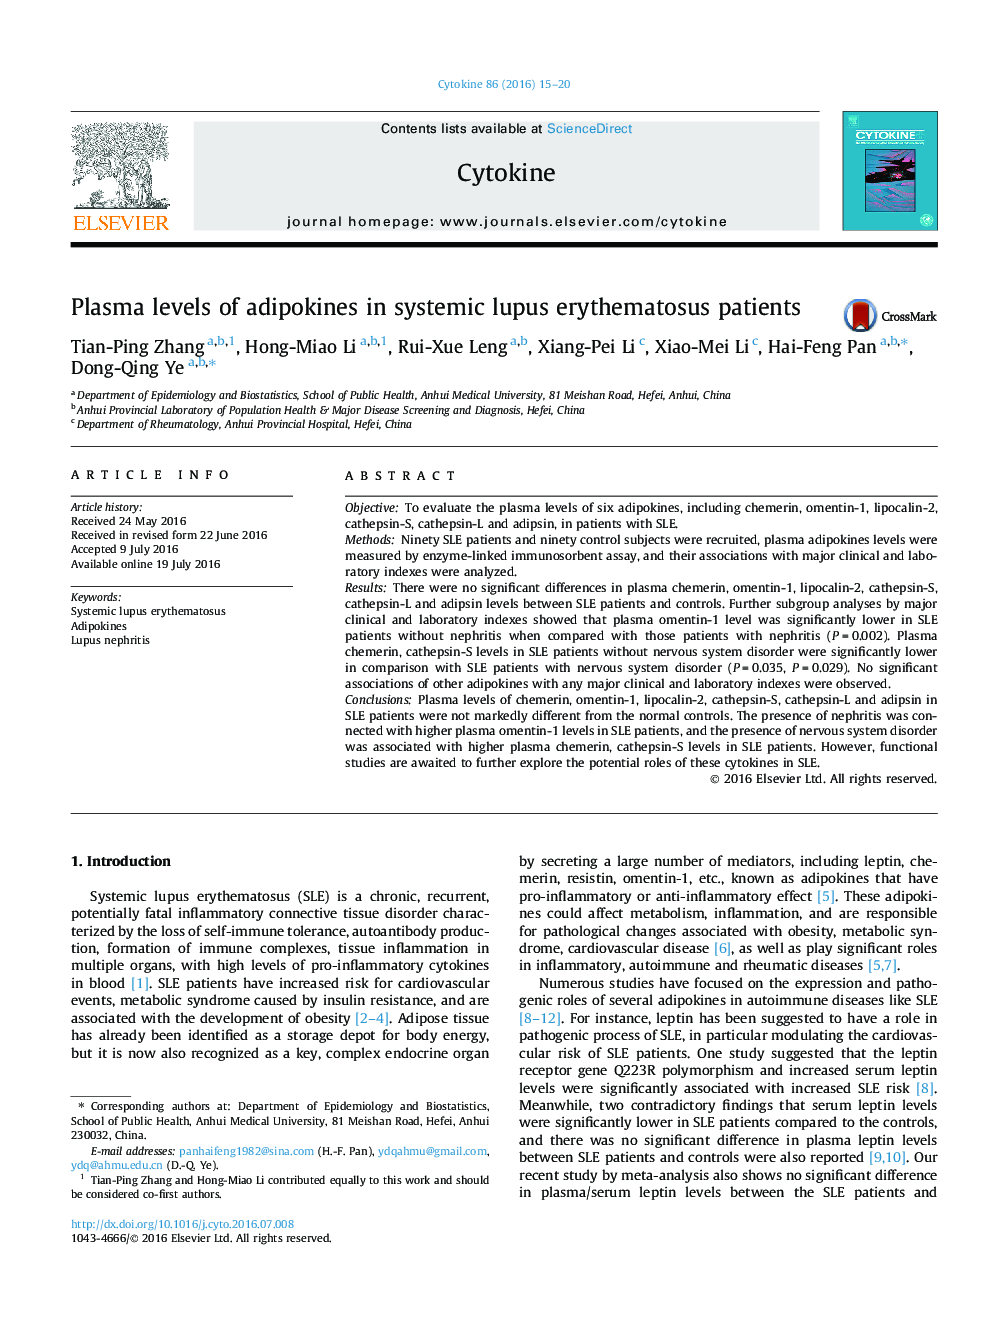 Plasma levels of adipokines in systemic lupus erythematosus patients